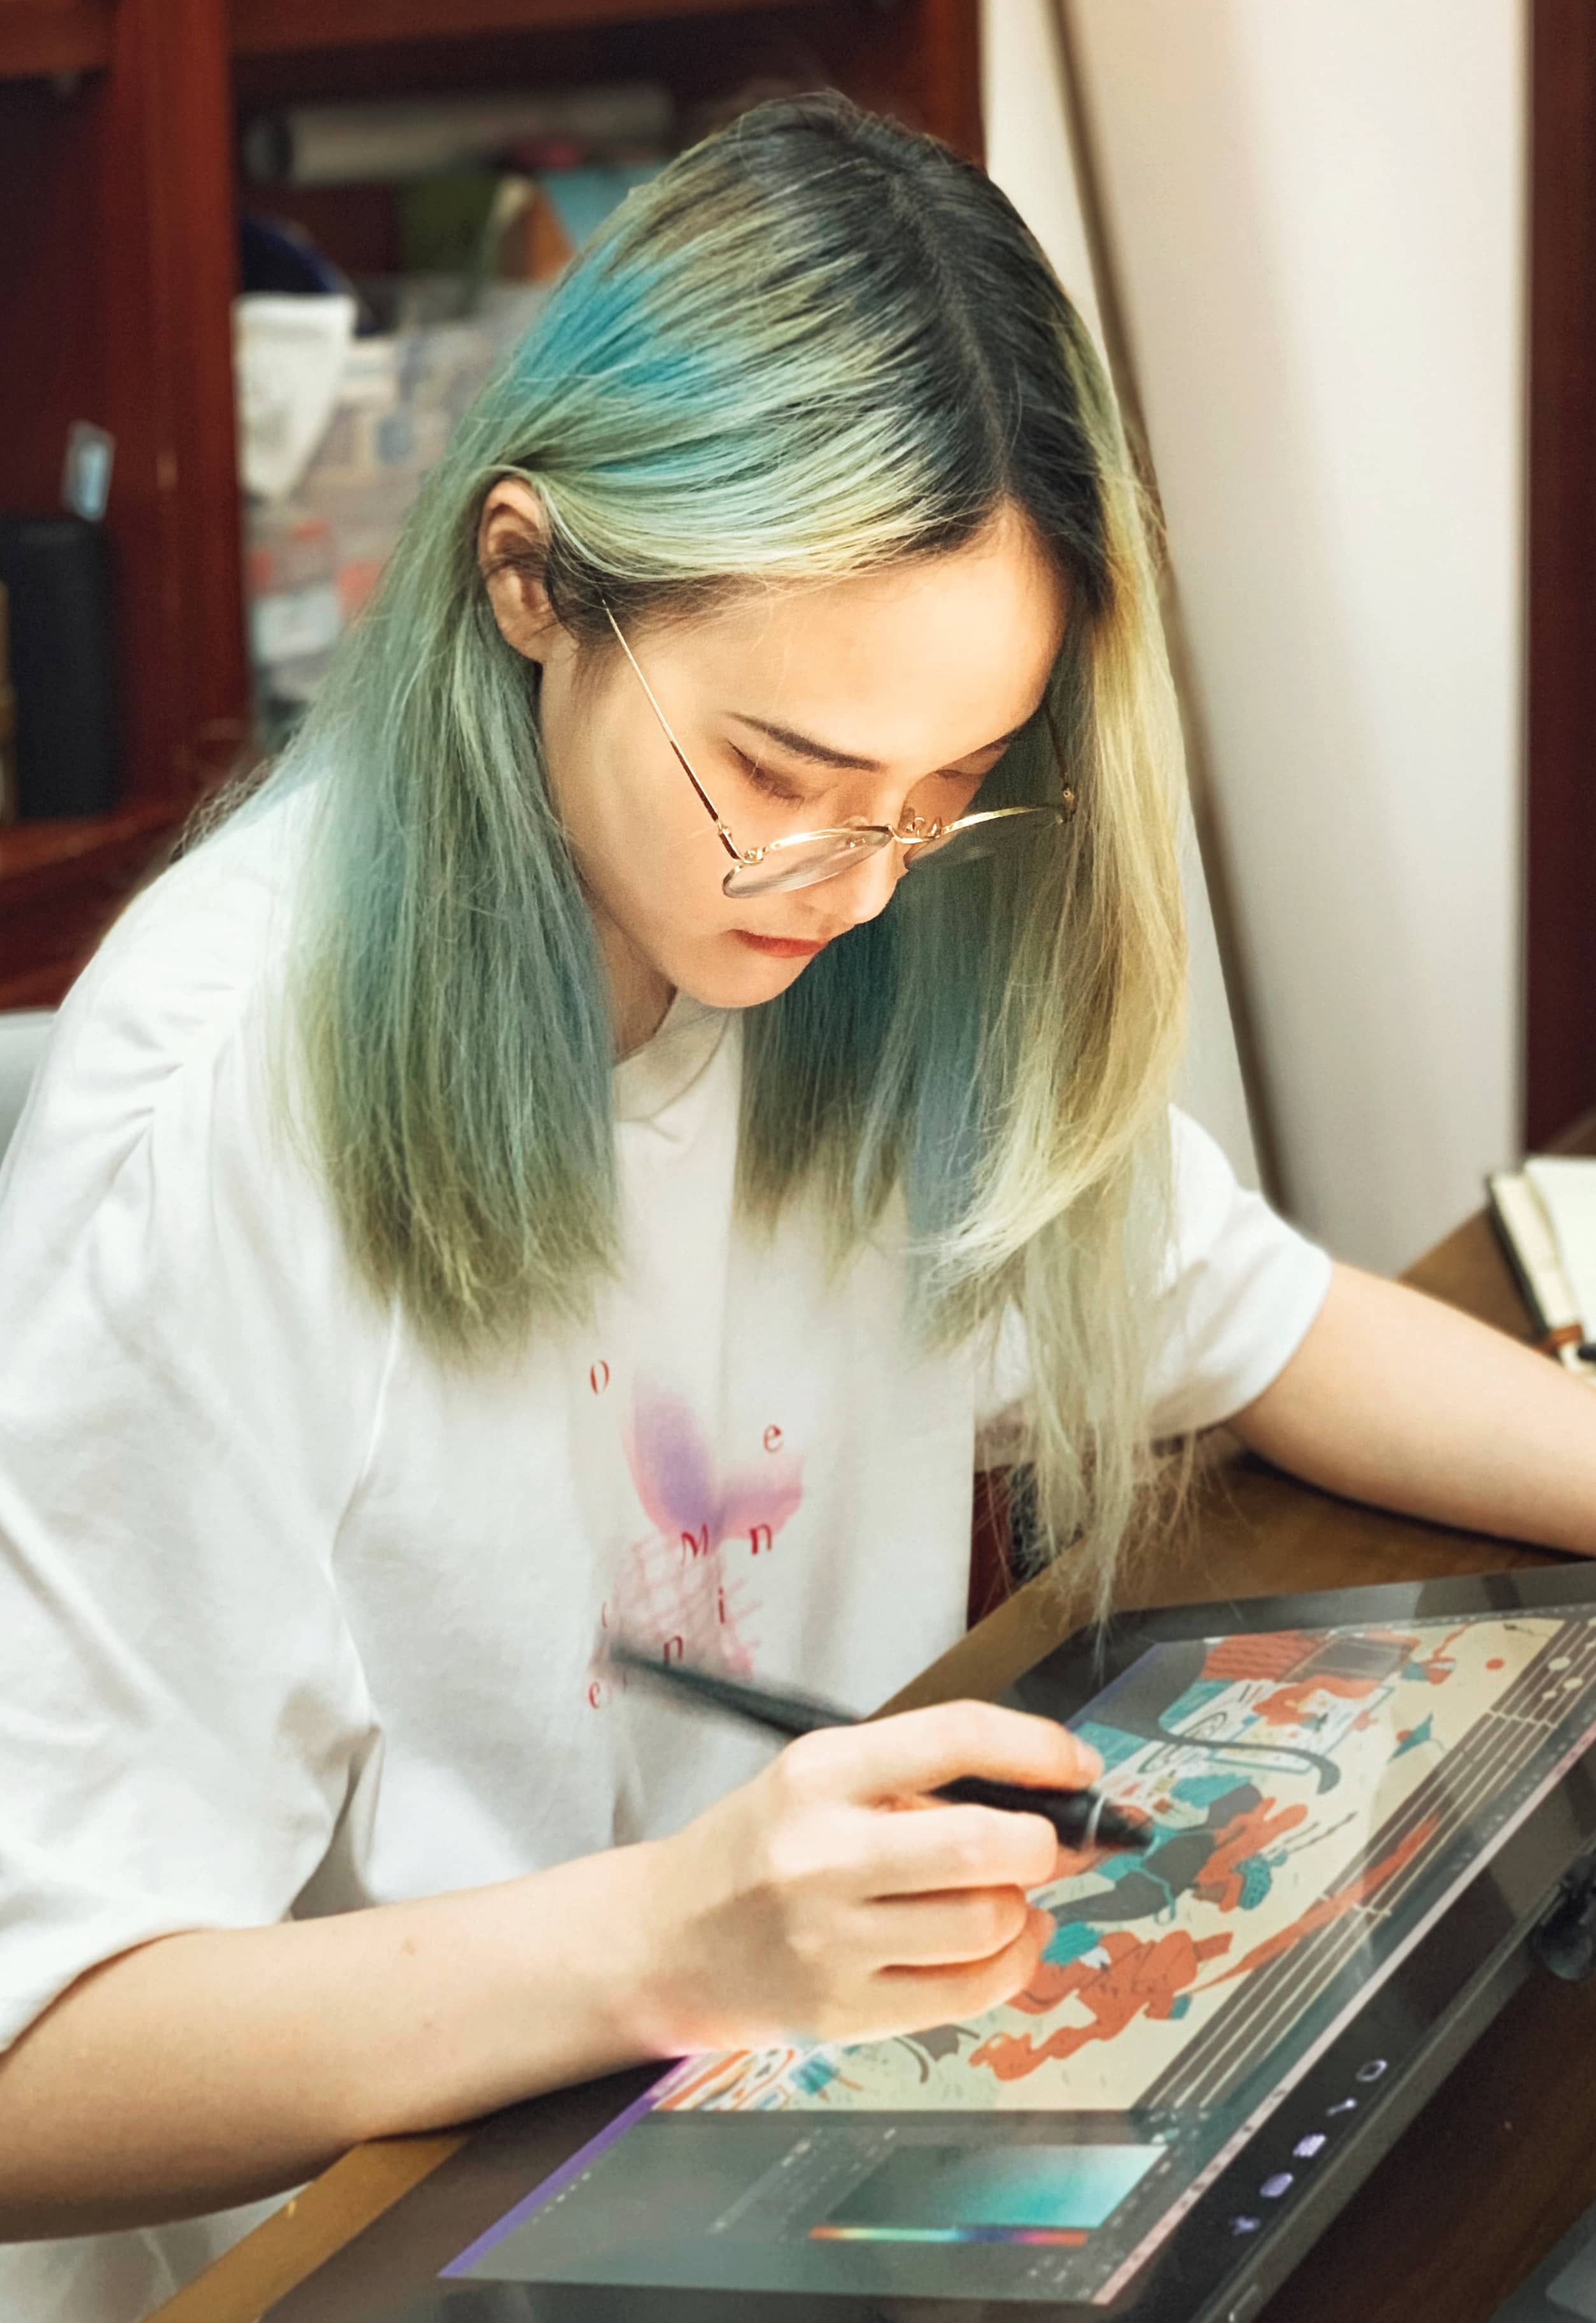 Peilin Li drawing on her tablet